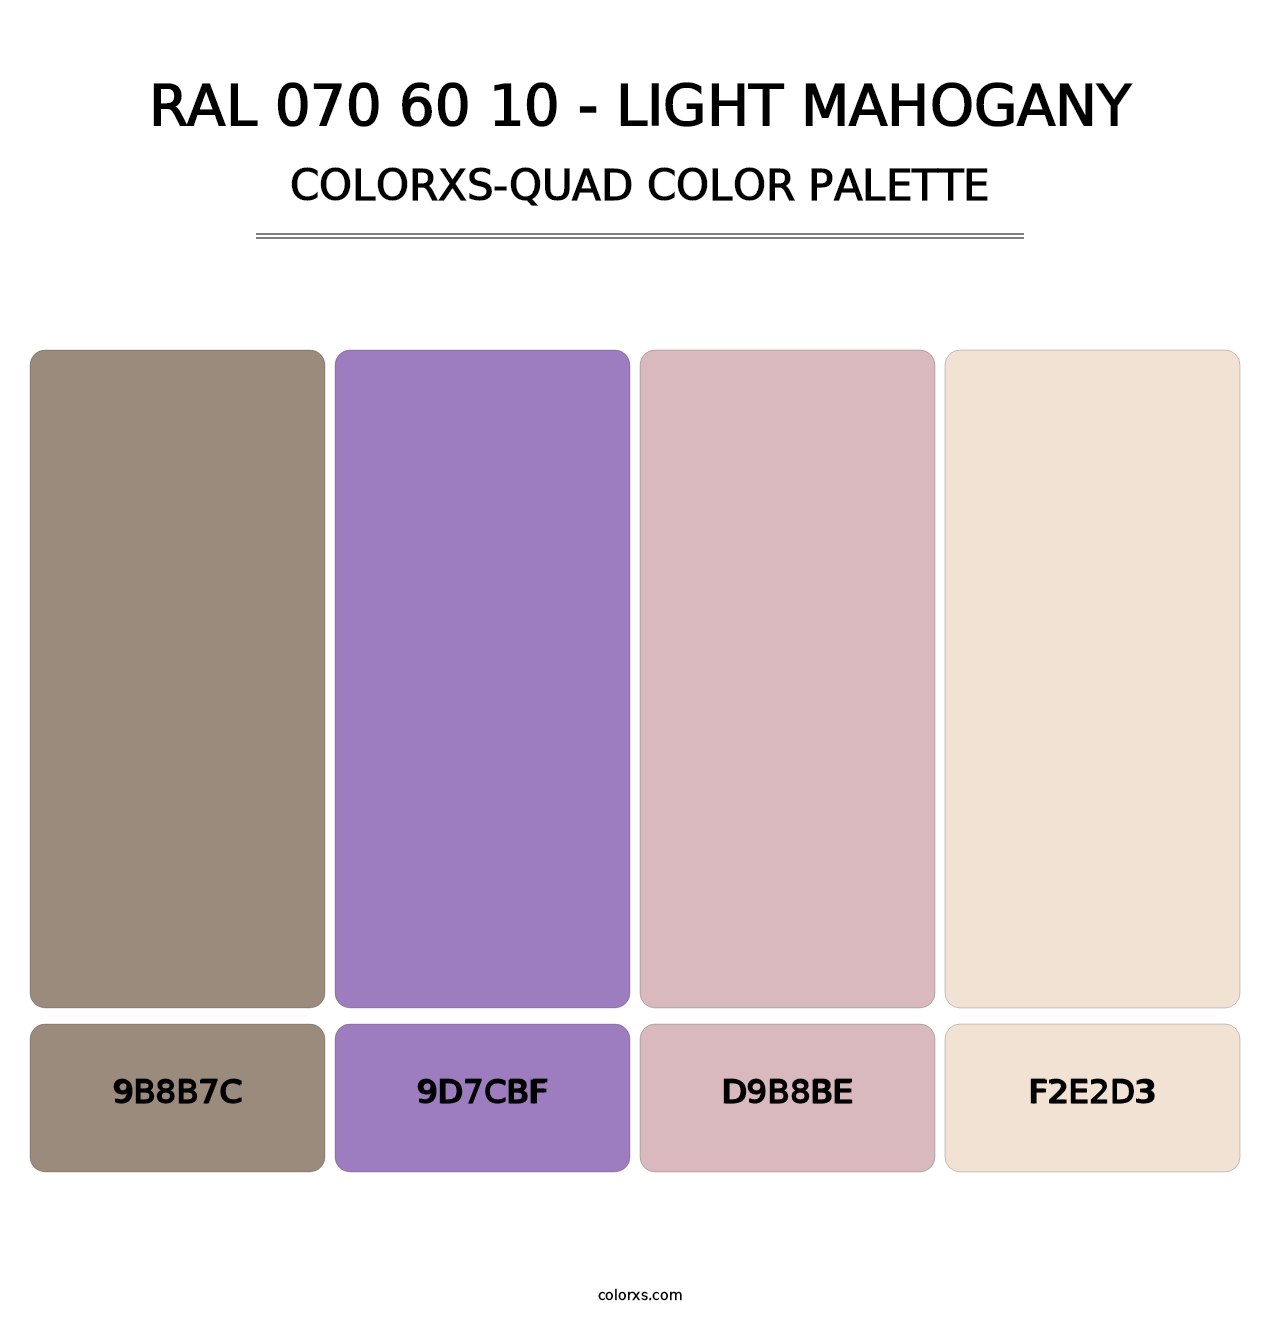 RAL 070 60 10 - Light Mahogany - Colorxs Quad Palette